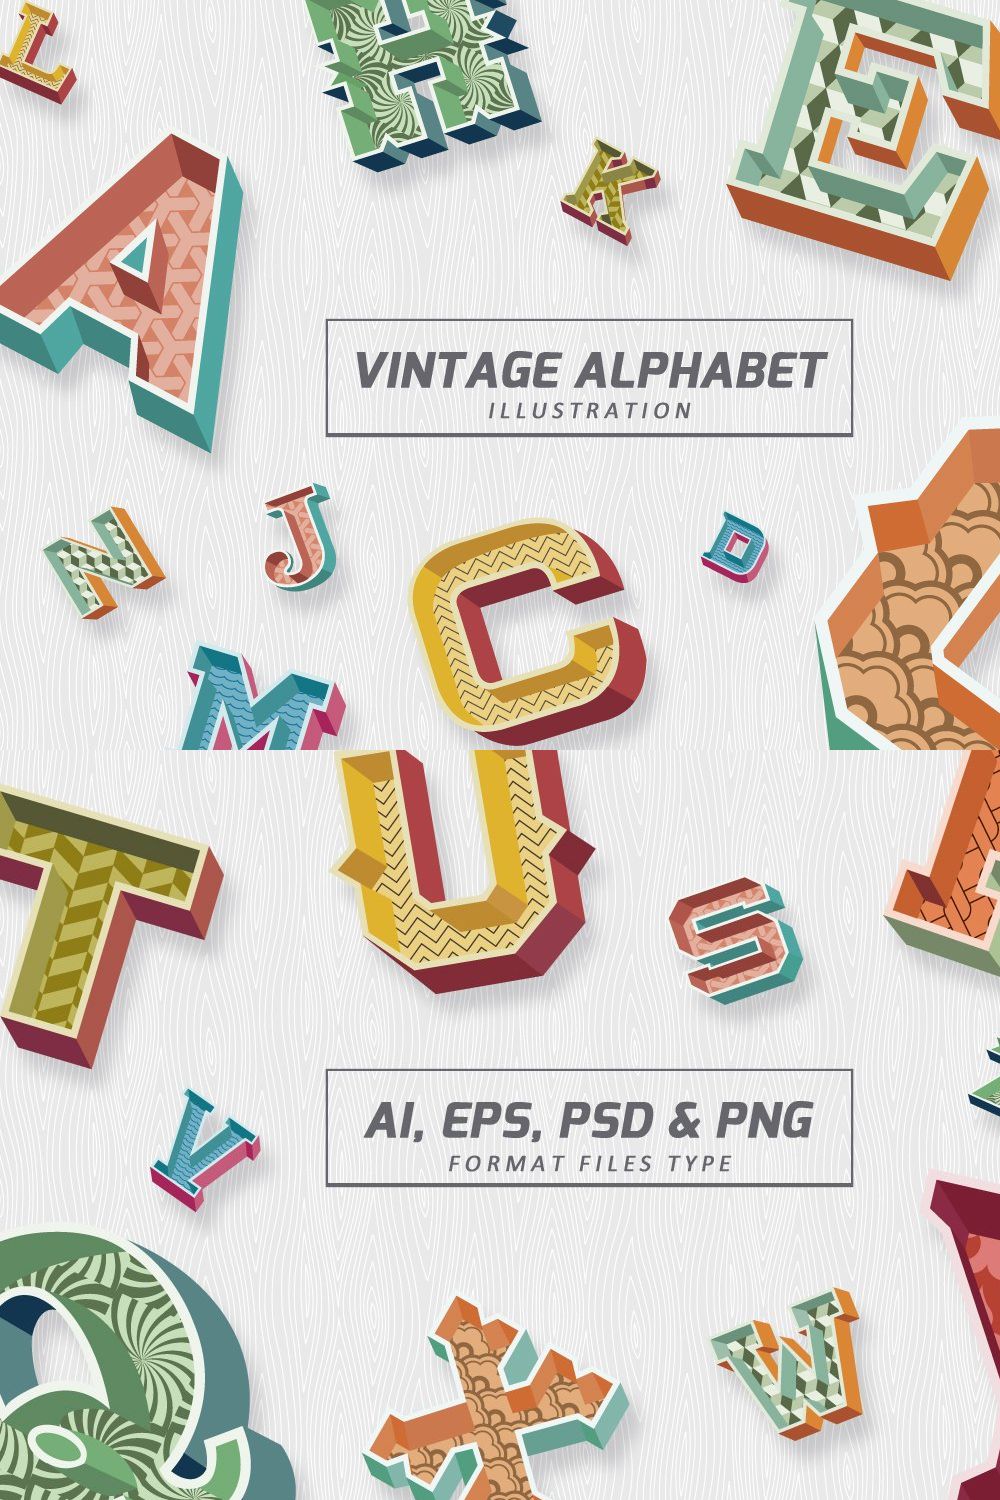 Vintage Alphabet Illustration pinterest preview image.